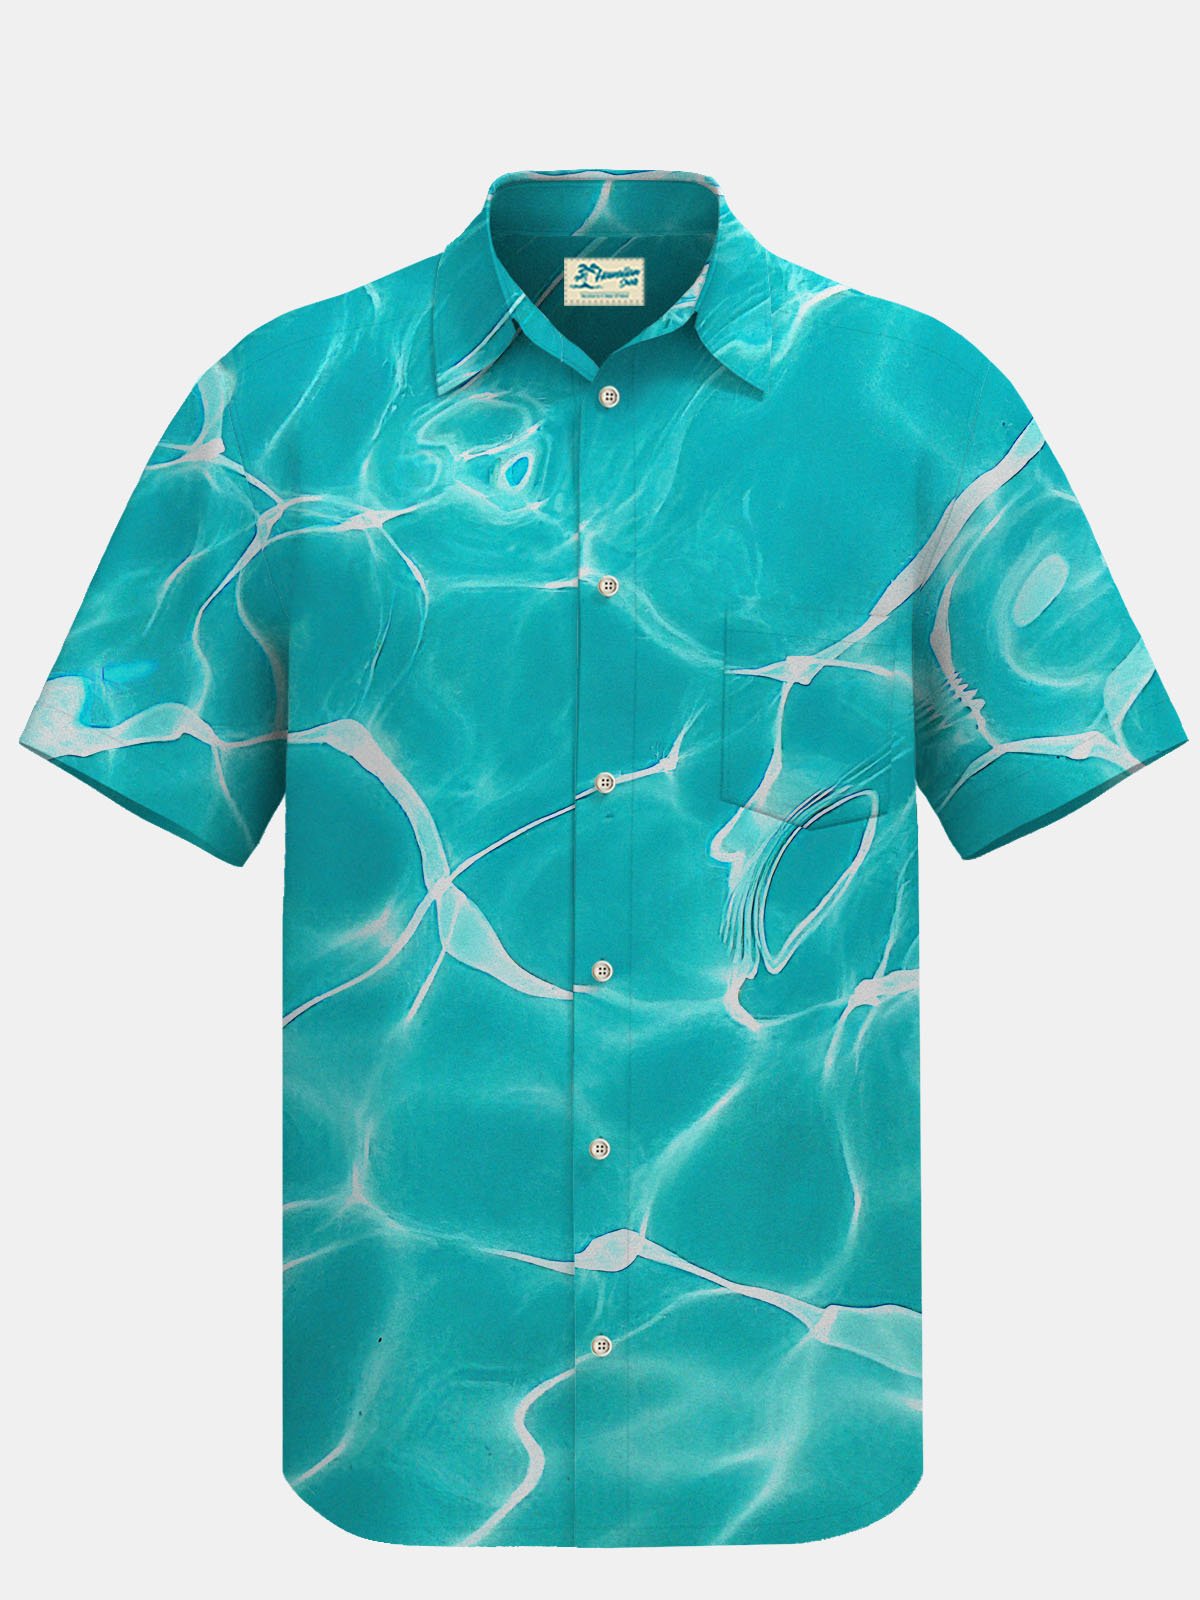 Royaura Waterproof Water Ripple Gradient Print Beach Hawaiian Shirt Stain Resistant Hydrophobic Breathable Big & Tall